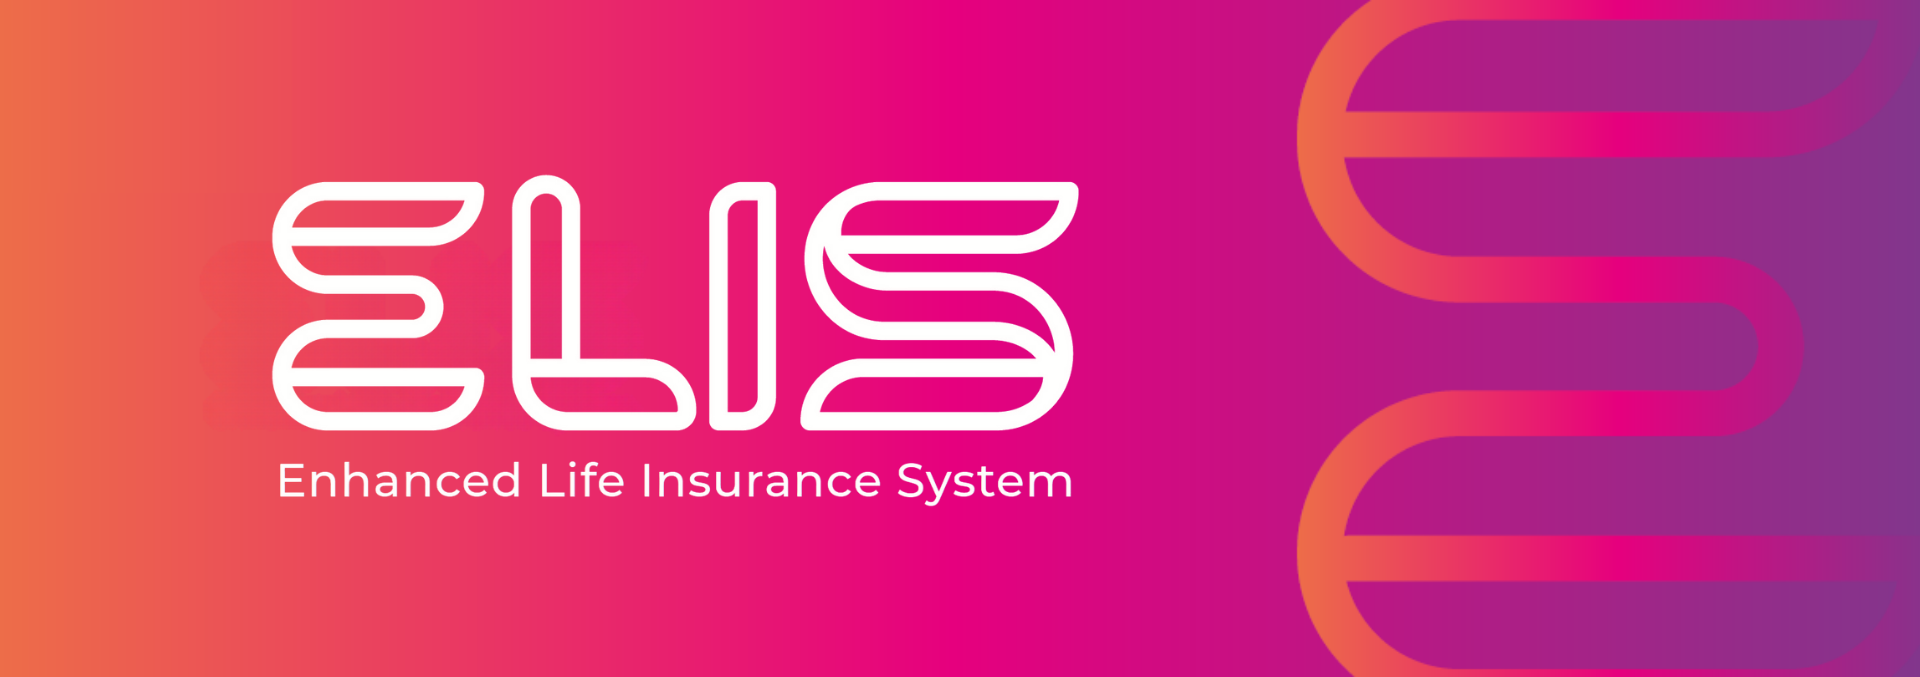 Story_ELIS – Enhanced Life Insurance System